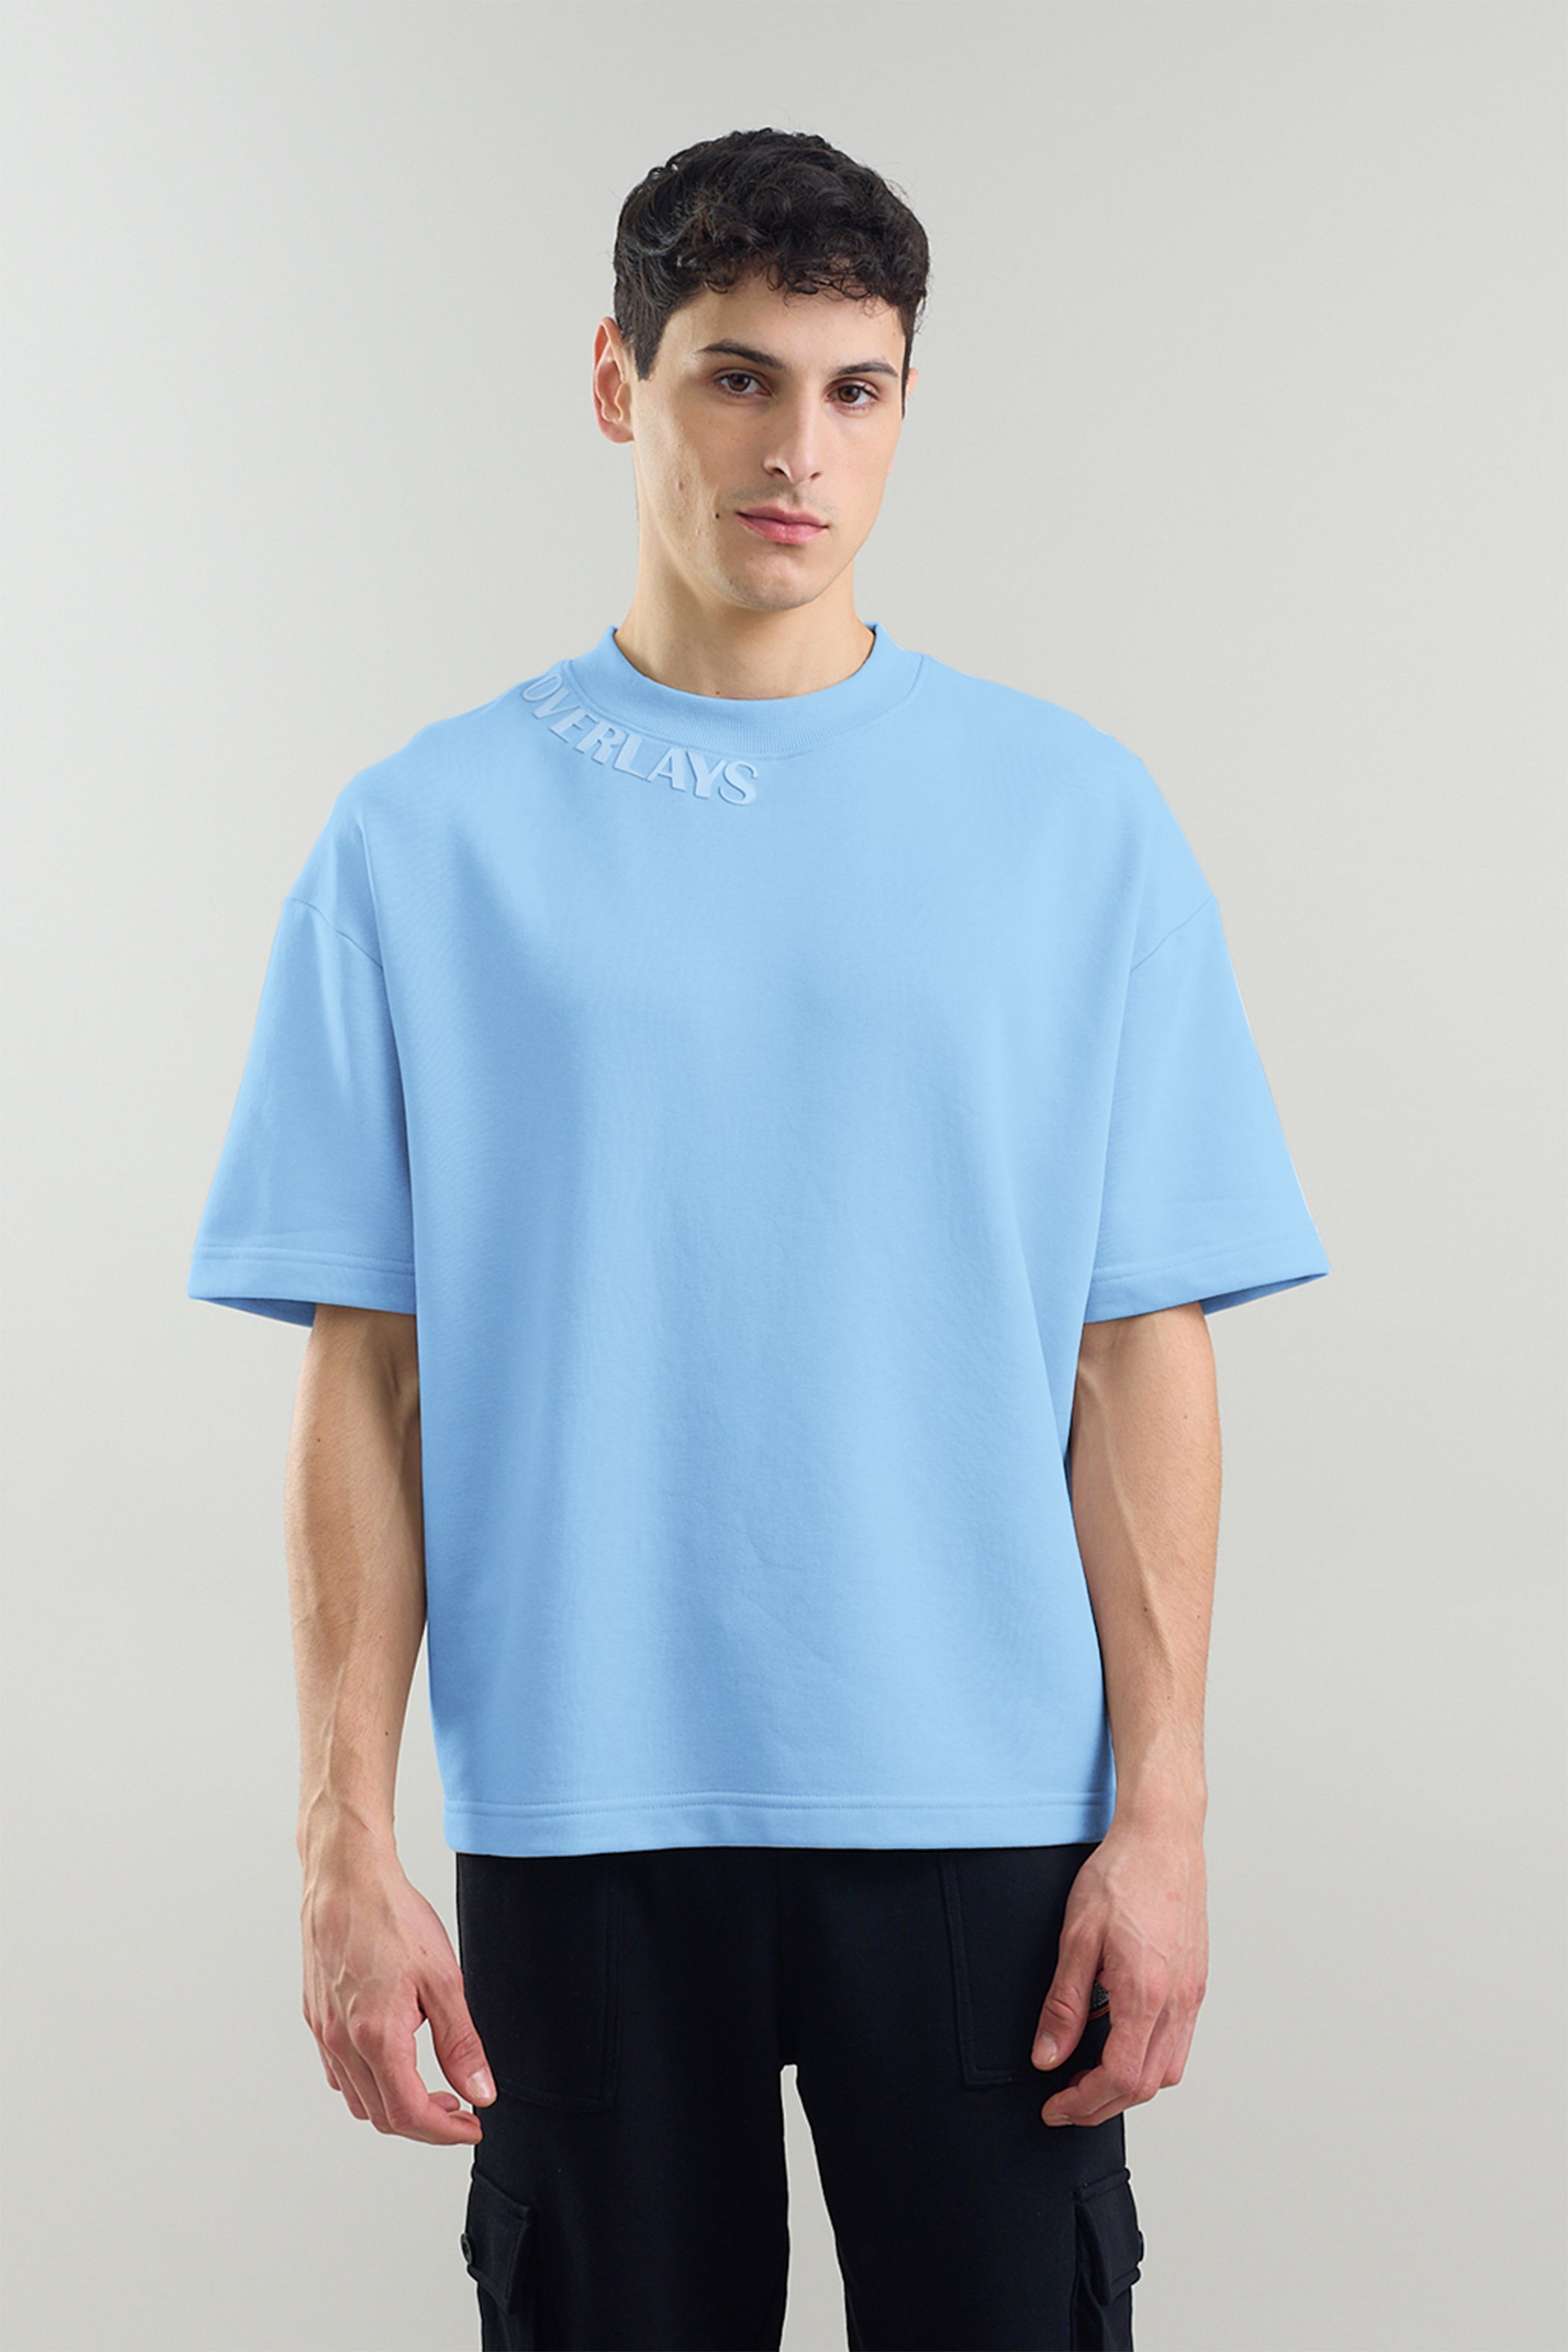 Arc Artic Oversized Fit T-shirt - Ultra Soft